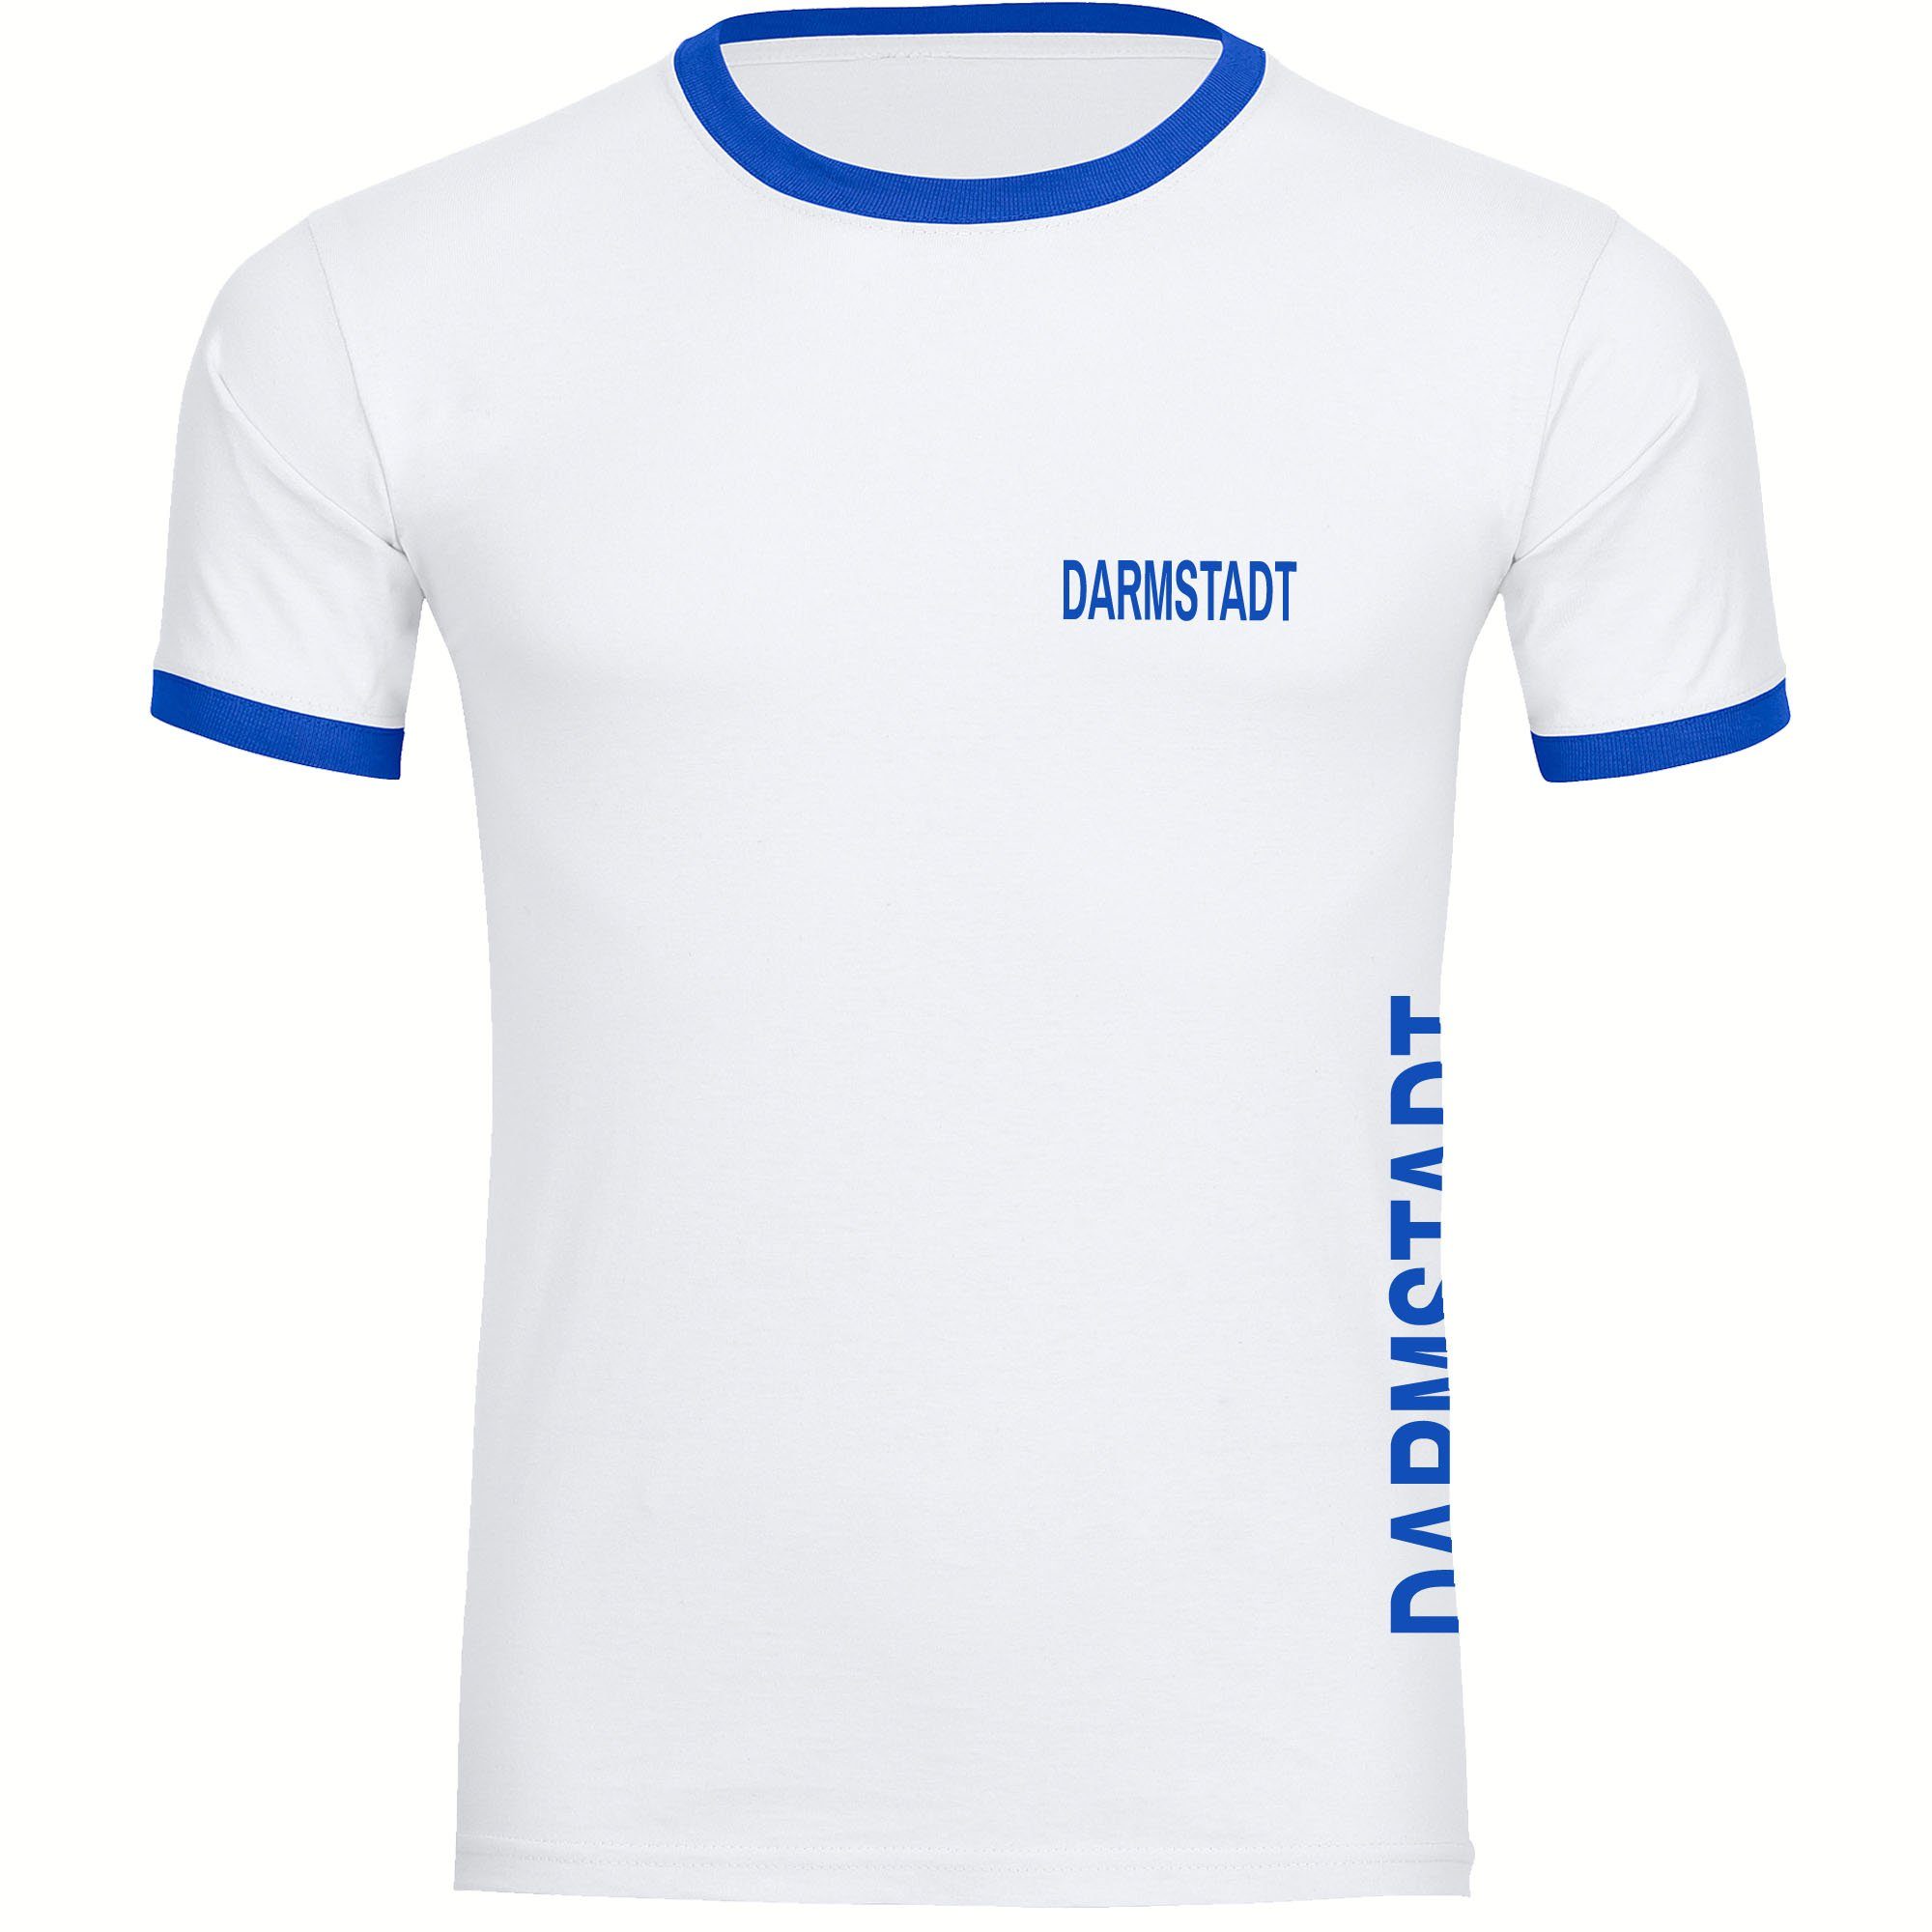 multifanshop T-Shirt Kontrast Darmstadt - Brust & Seite - Männer